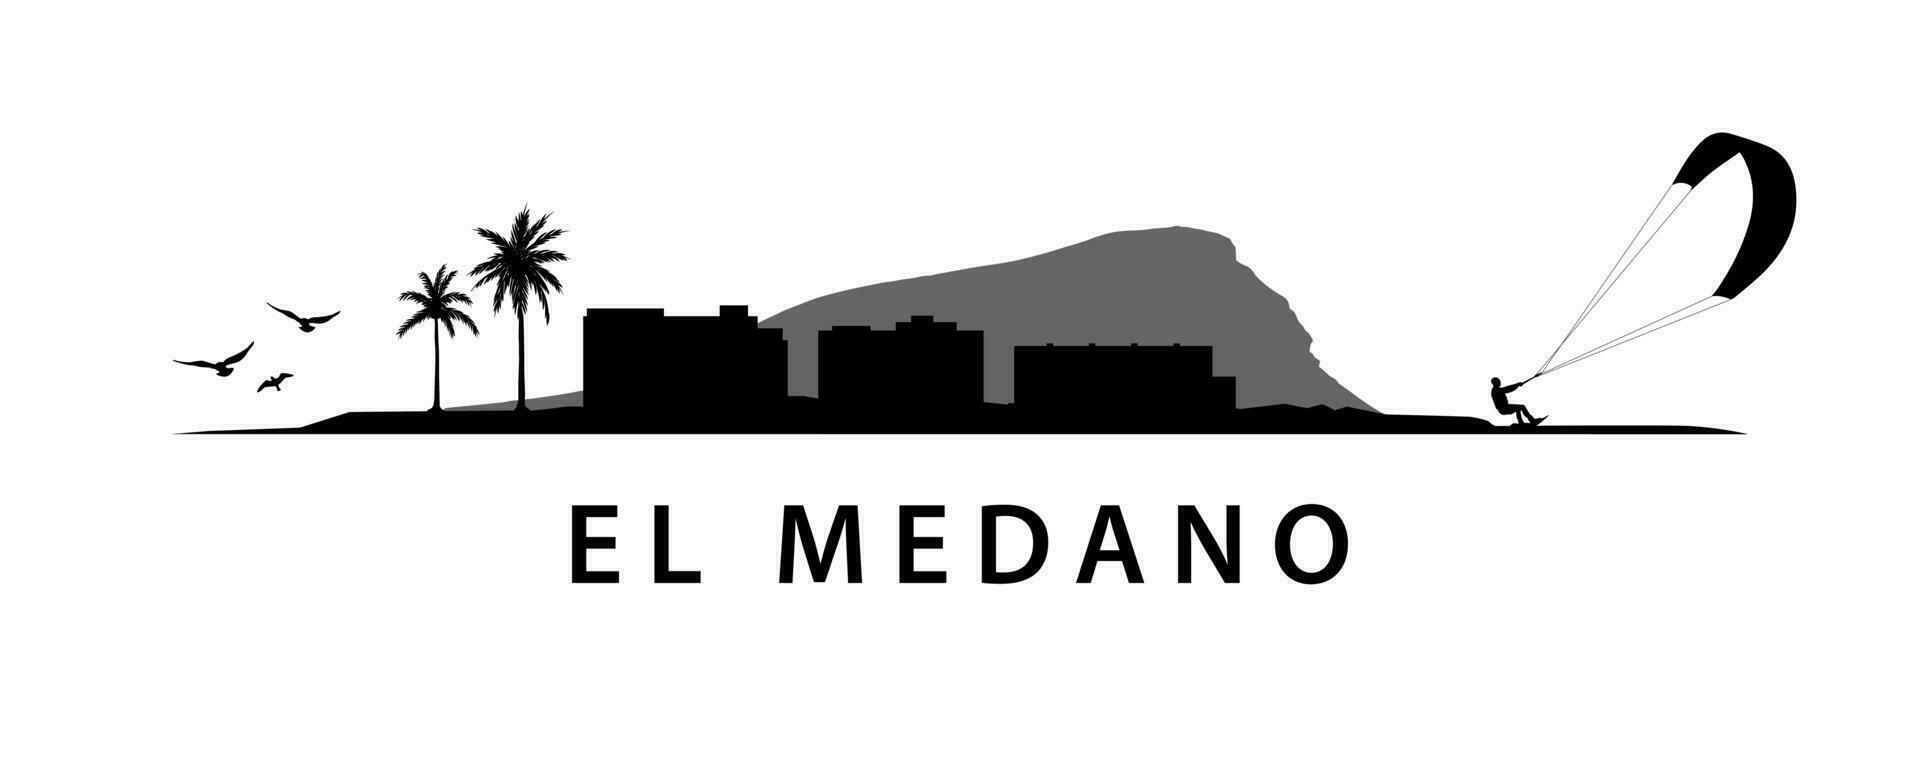 horisont av el medano. landskap av stad i tenerife ö. spanska stad grafisk design. vektor